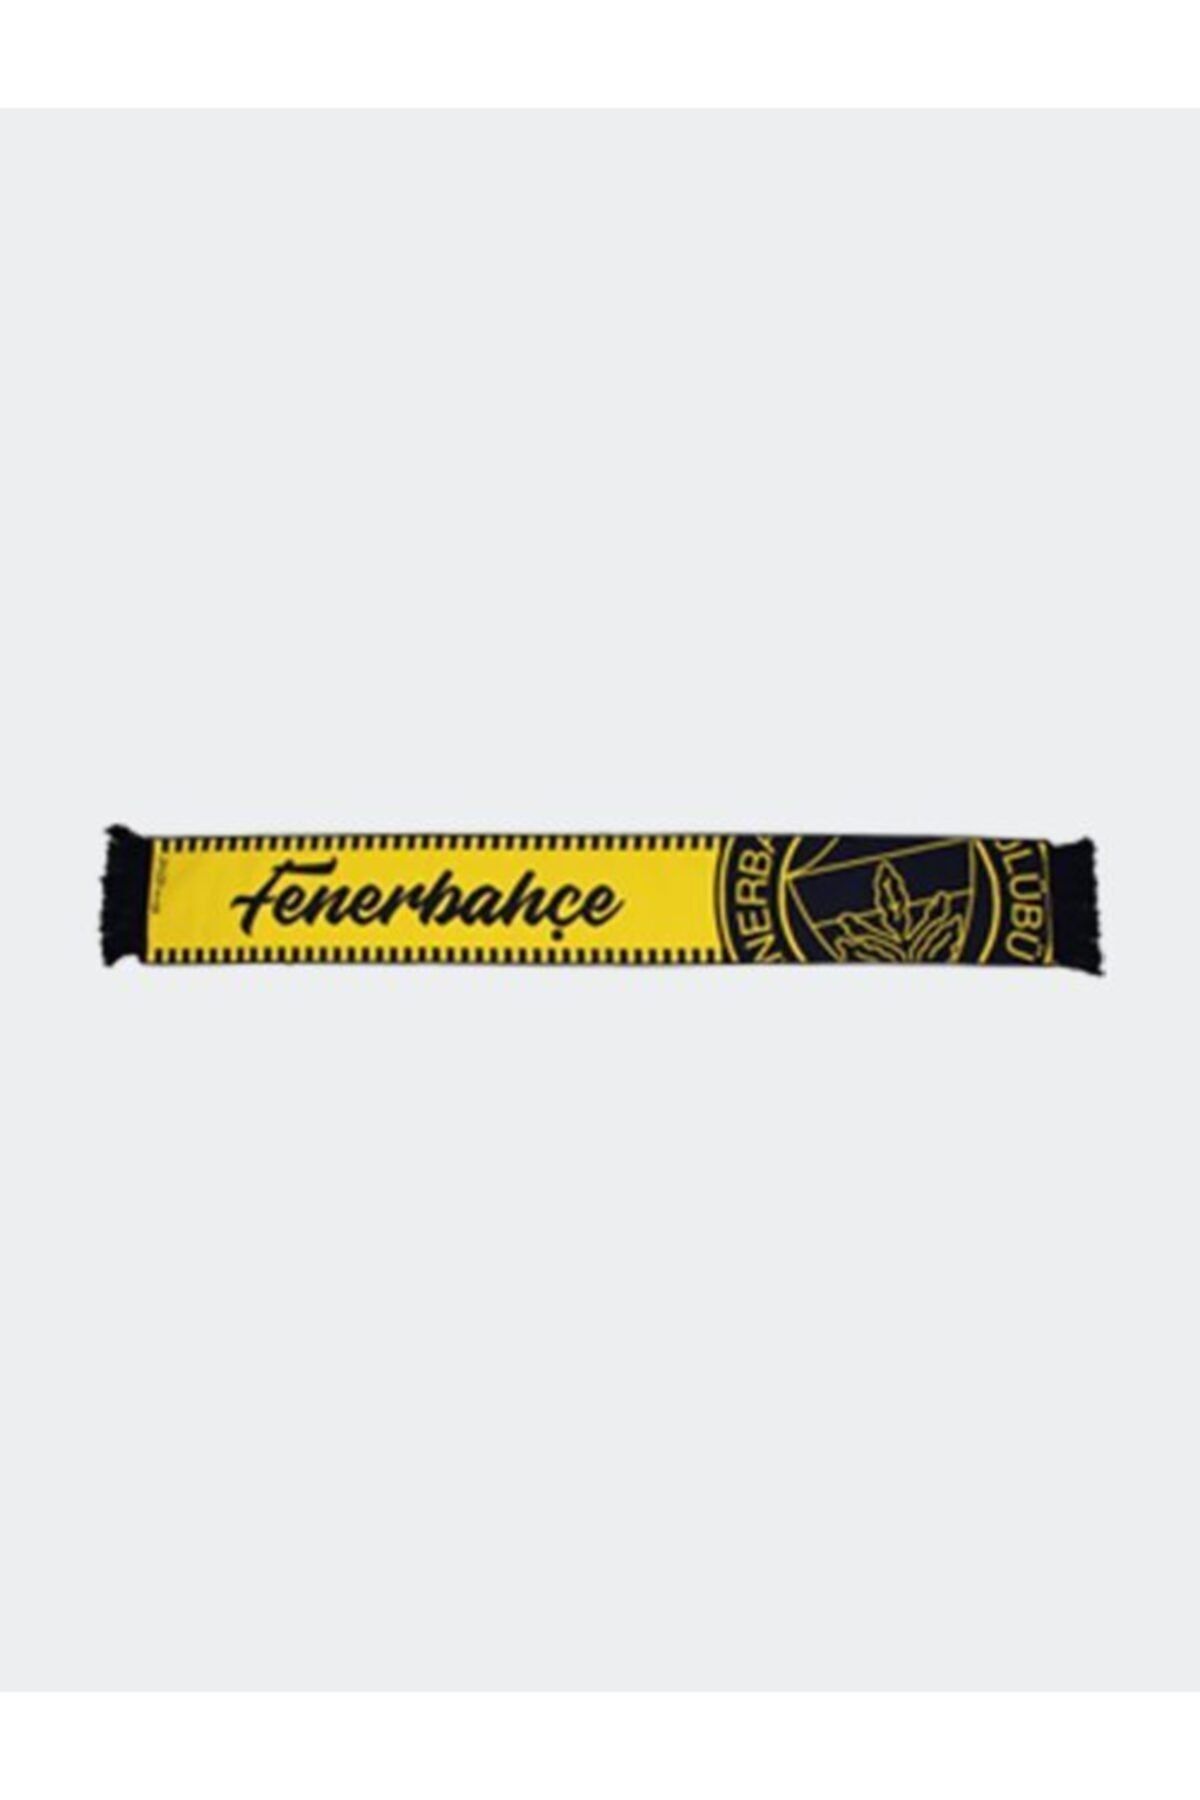 Fenerbahçe Fenerbahçe Laci Logo Dokuma Atkı